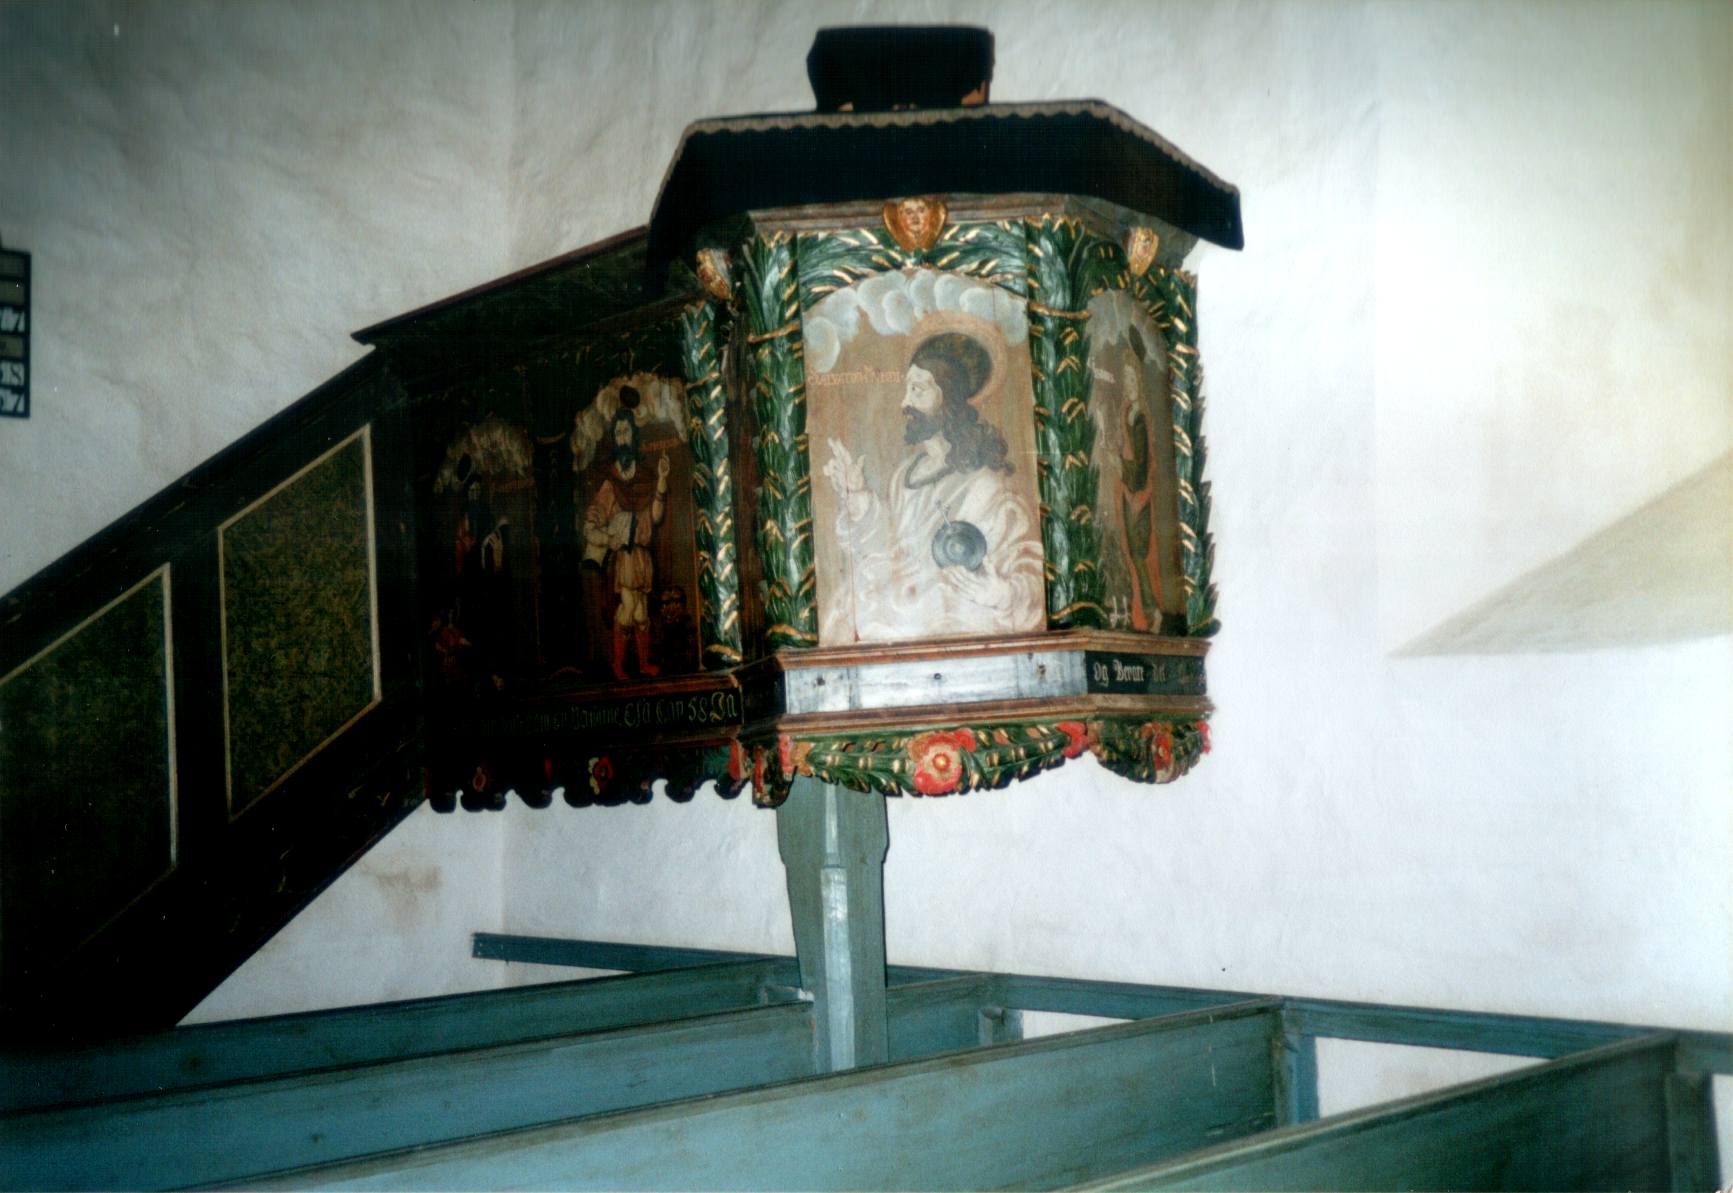 Romnes Kirke - prekestolen igjen
Pulpit again